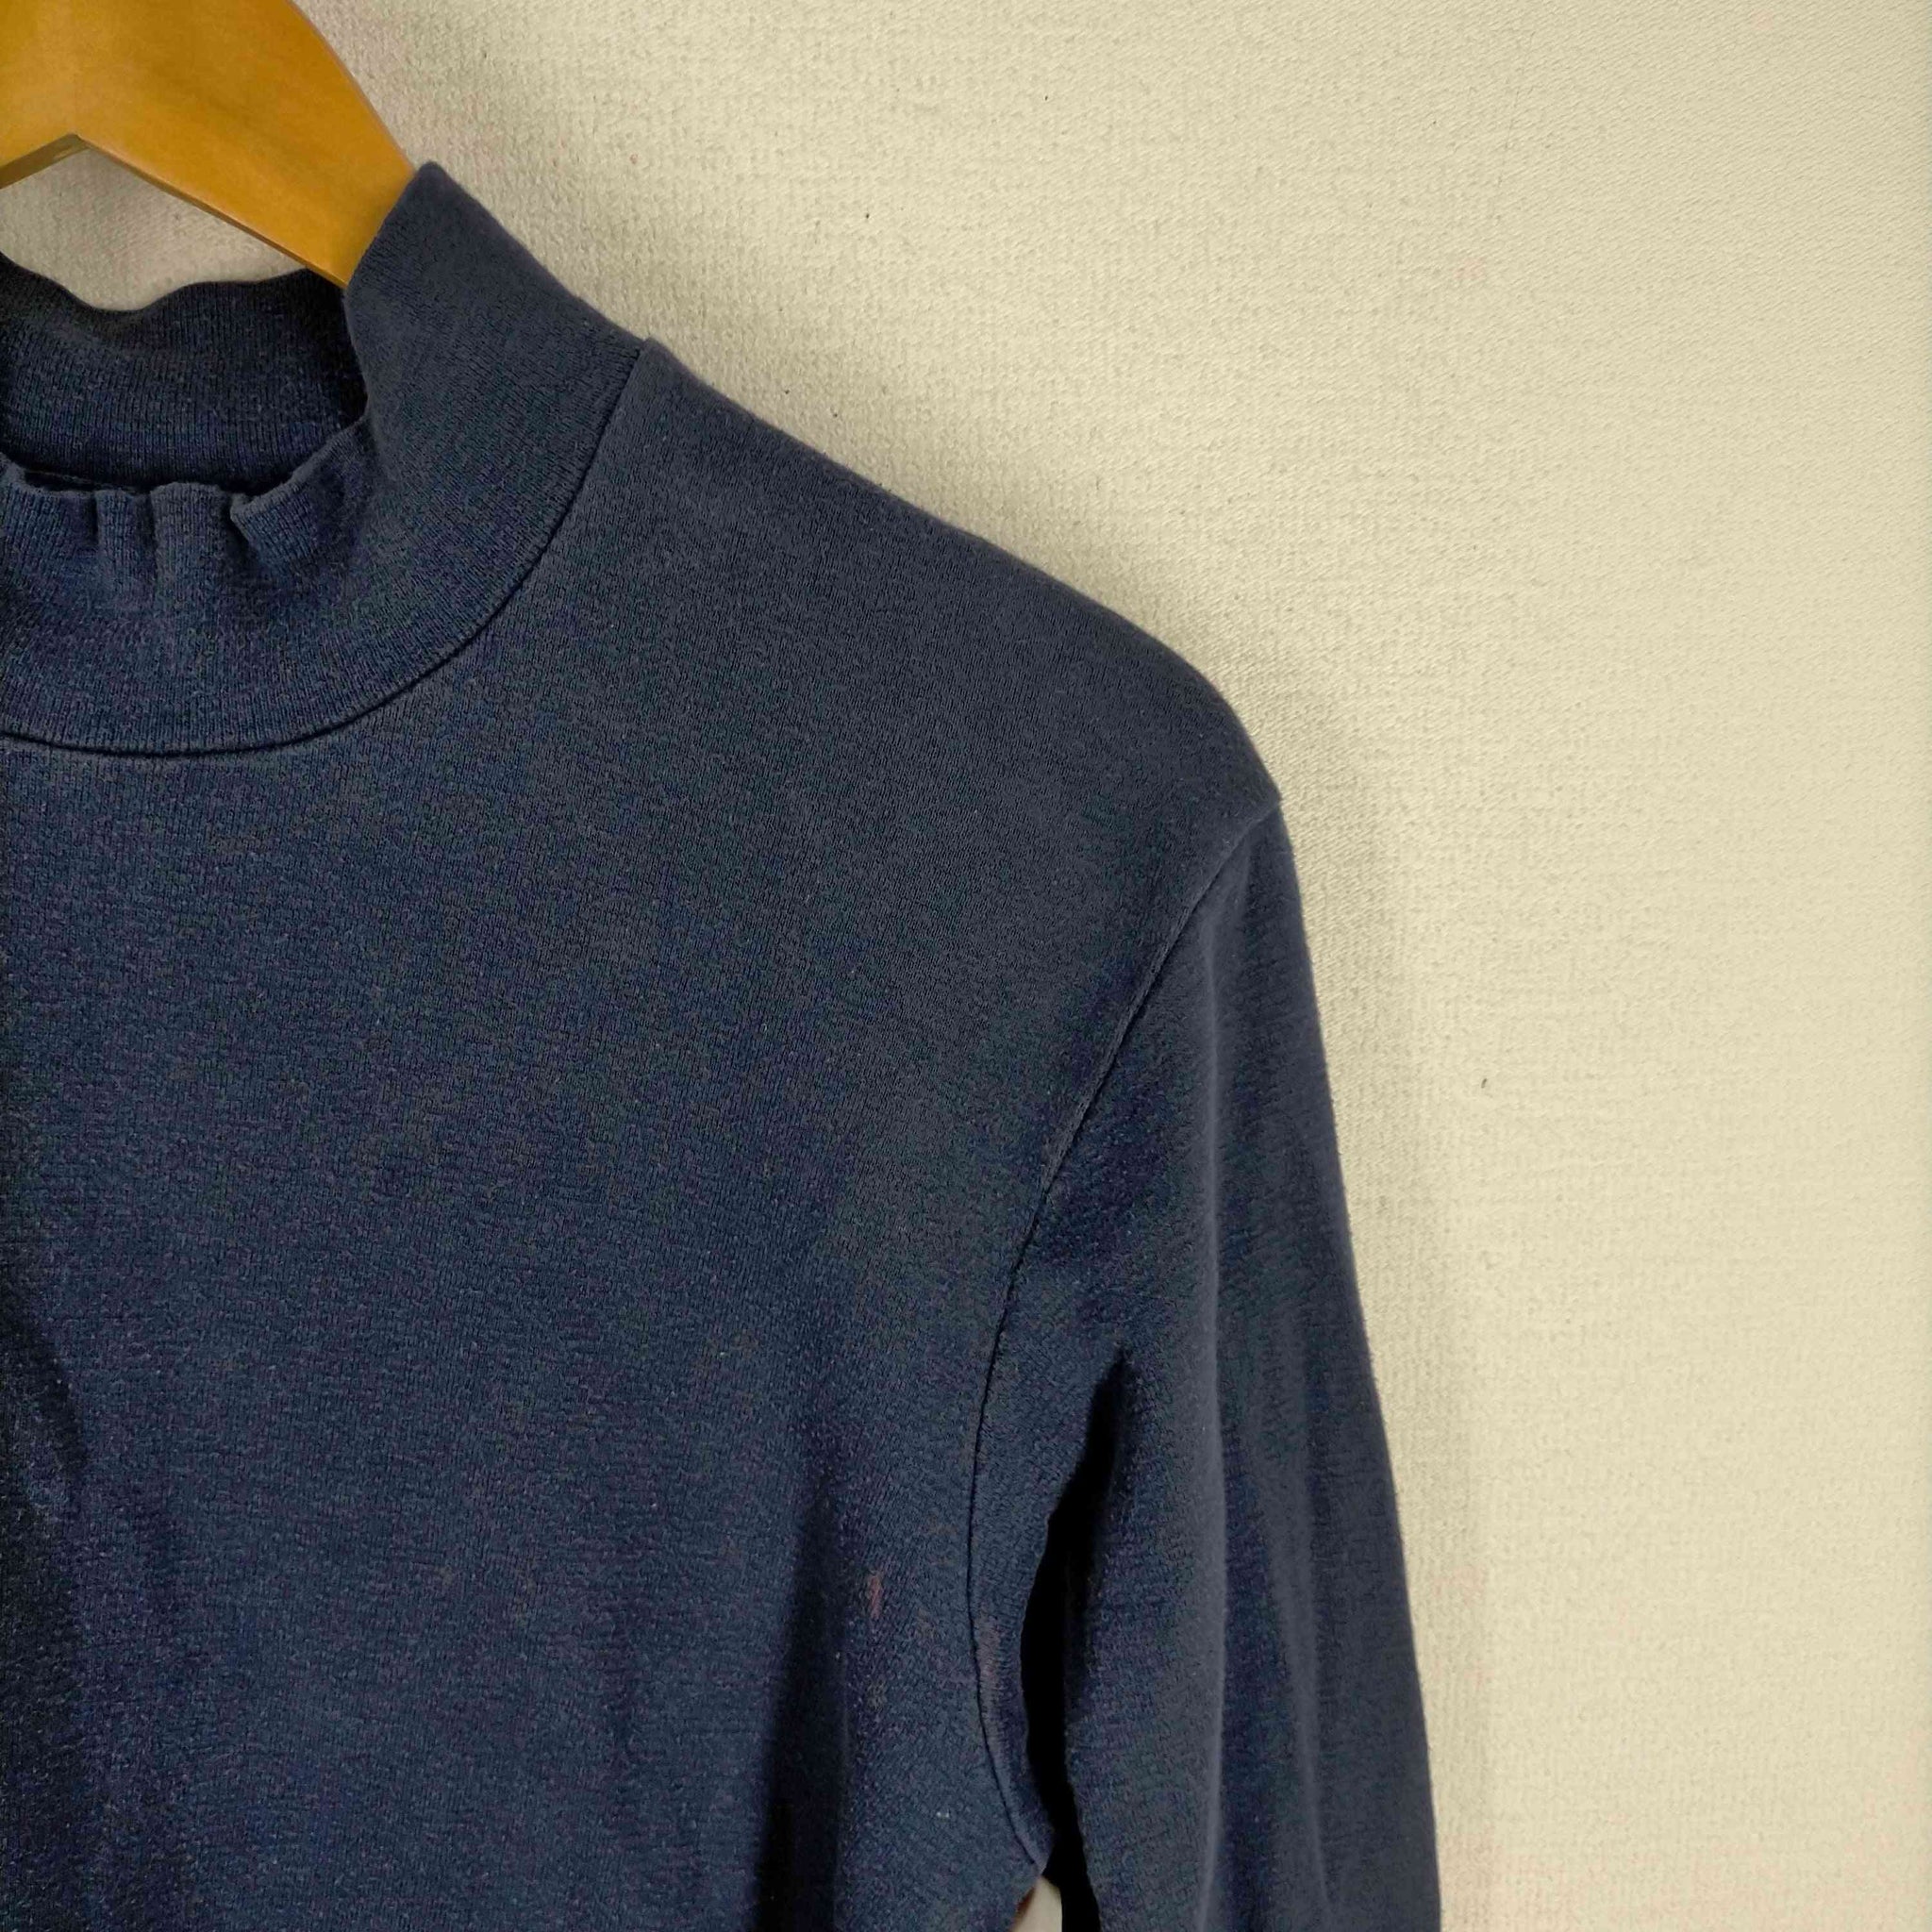 ANATOMICA(アナトミカ) MOCK NECK TEE L/S  コットンモックネック ロングスリーブ Tシャツ